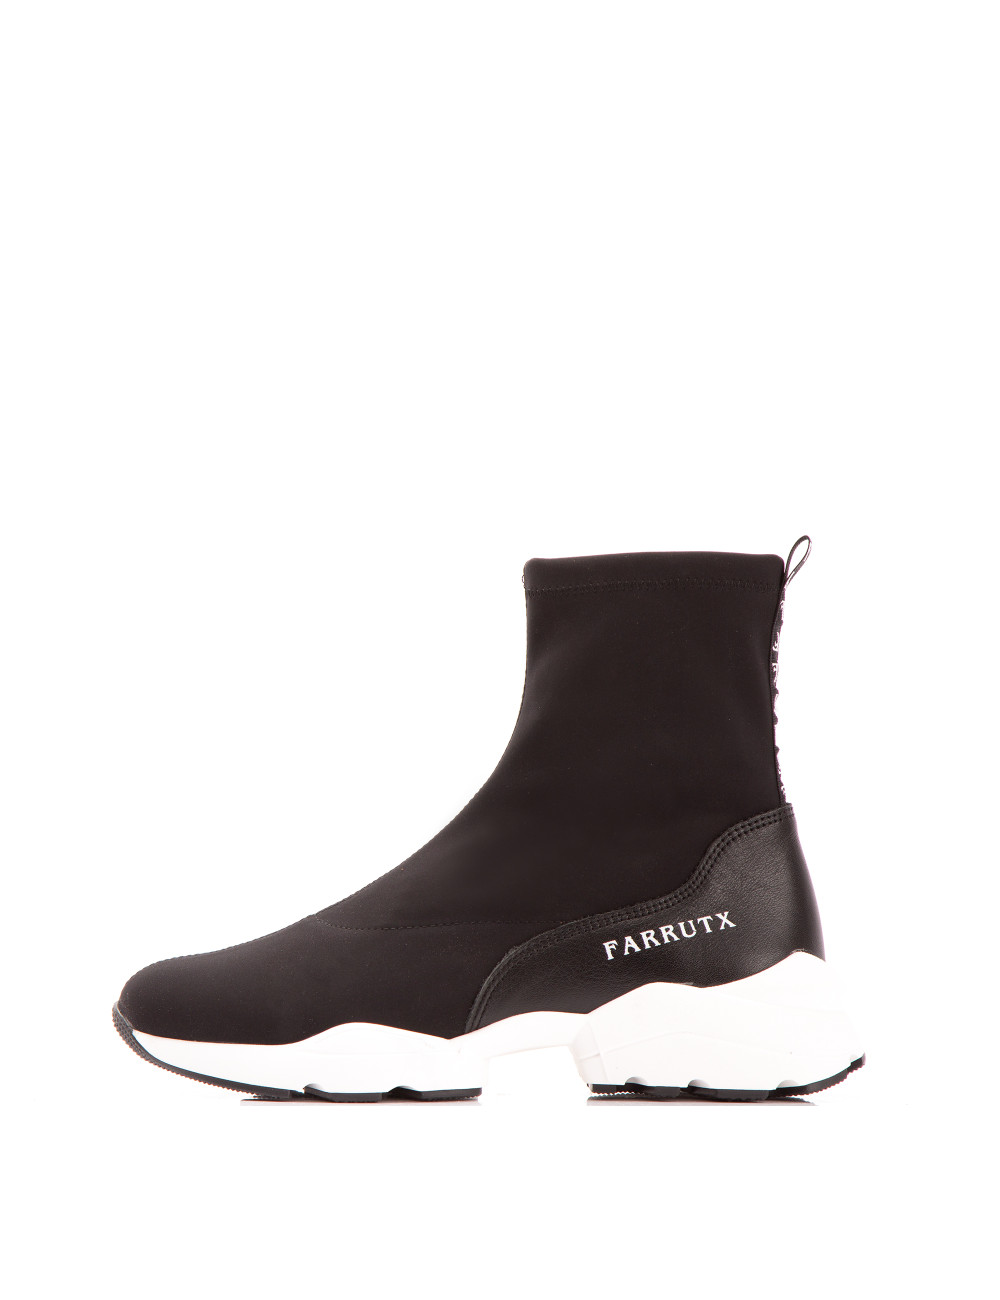 FARRUTX® | WEB OFICIAL - Compra y bolsos Farrutx